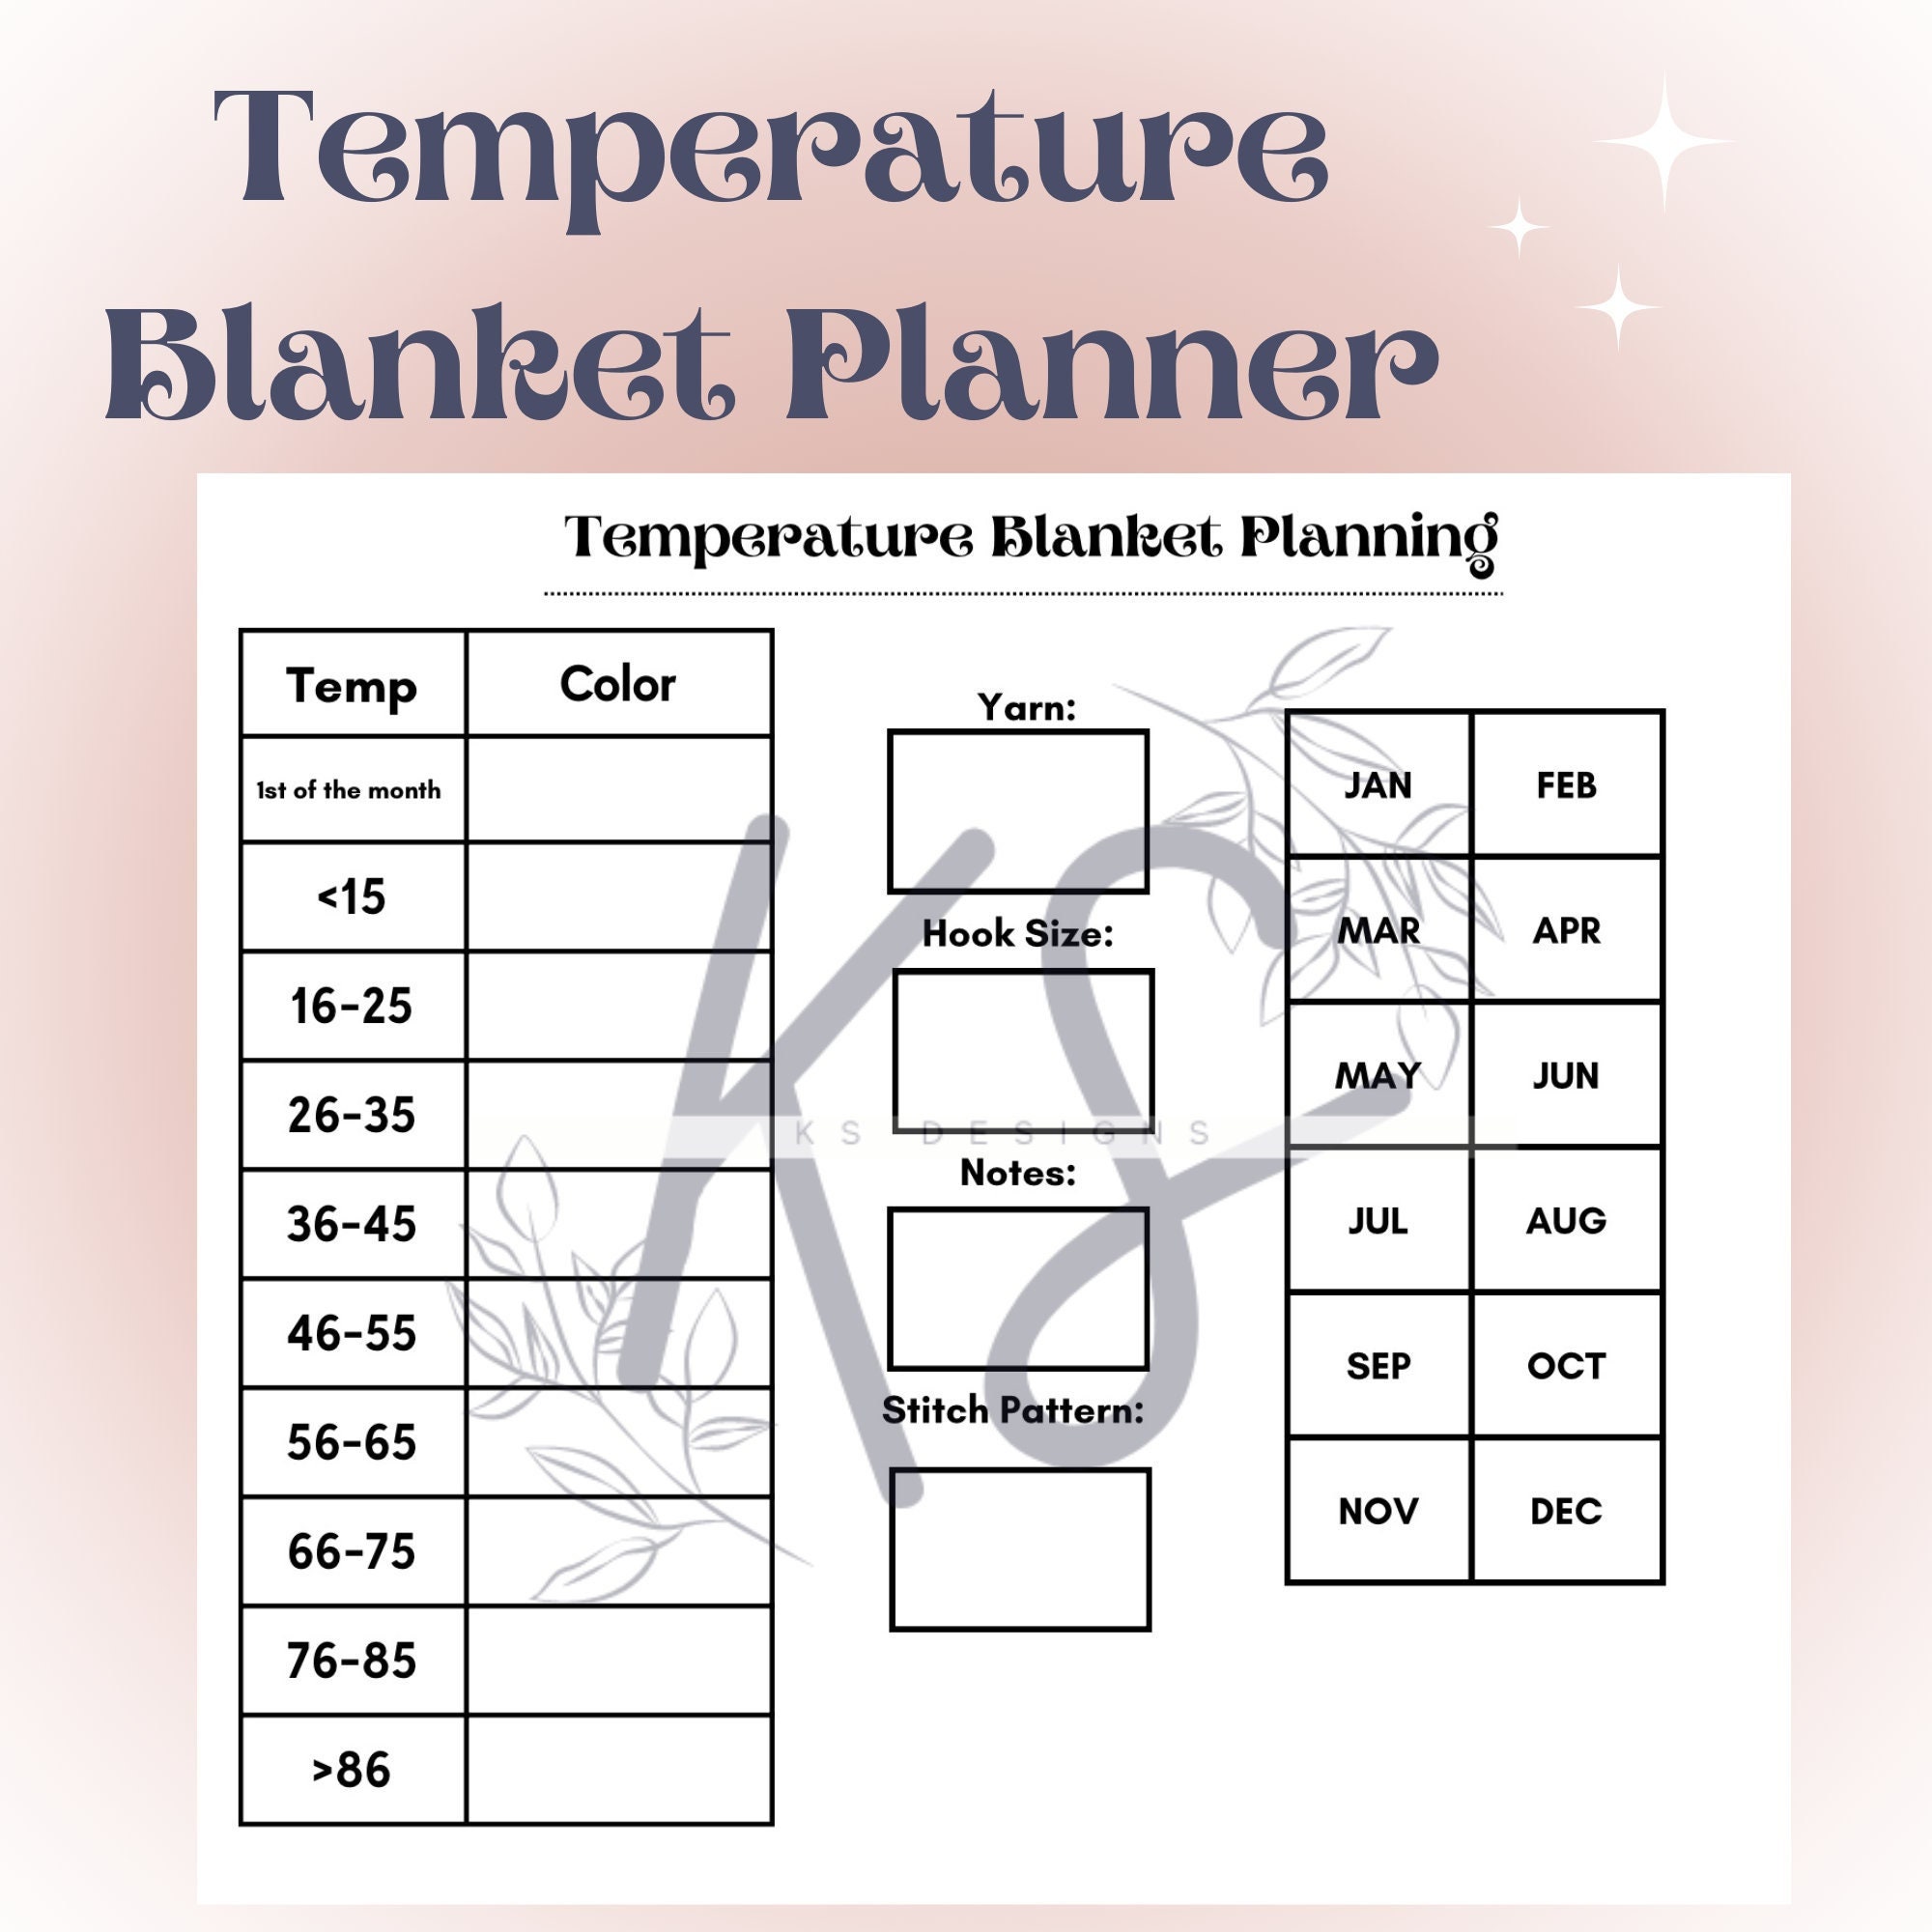 Crochet Knitted Temperature Blanket Planner Journal Log Book: 42